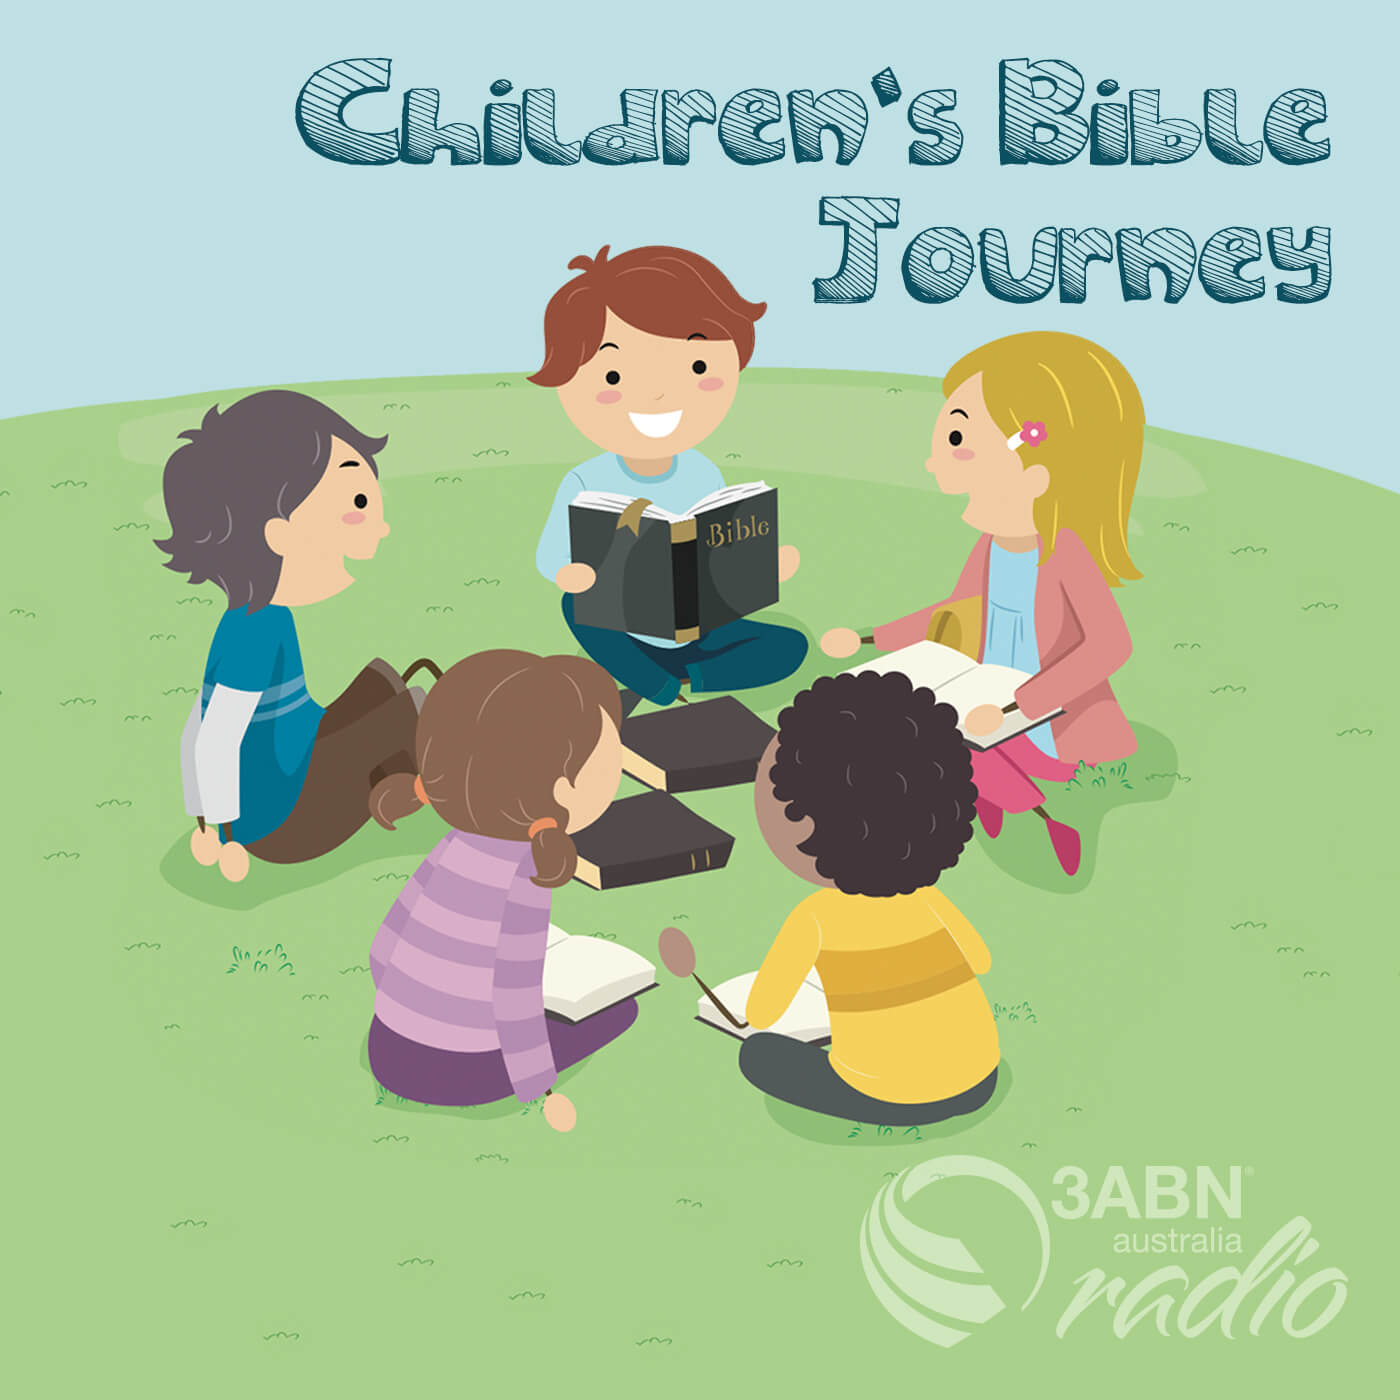 Children's Bible Journey - 2164